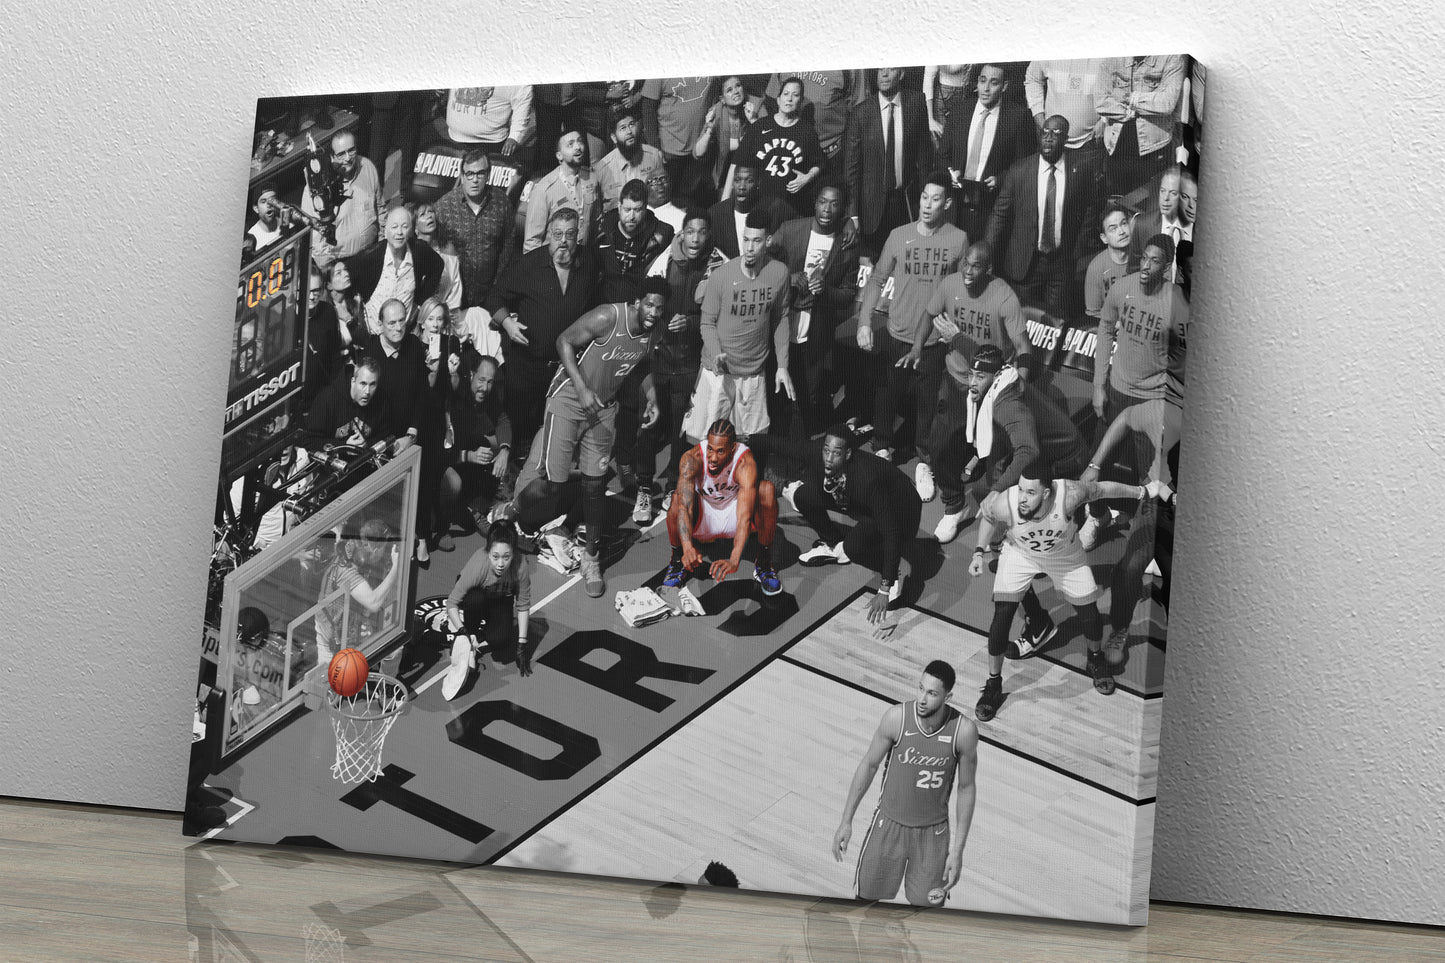 Kawhi Leonard Buzzer Beater Game 7 Poster Toronto Raptors Basketball Hand Made Posters Canvas Print Wall Art Home Decor